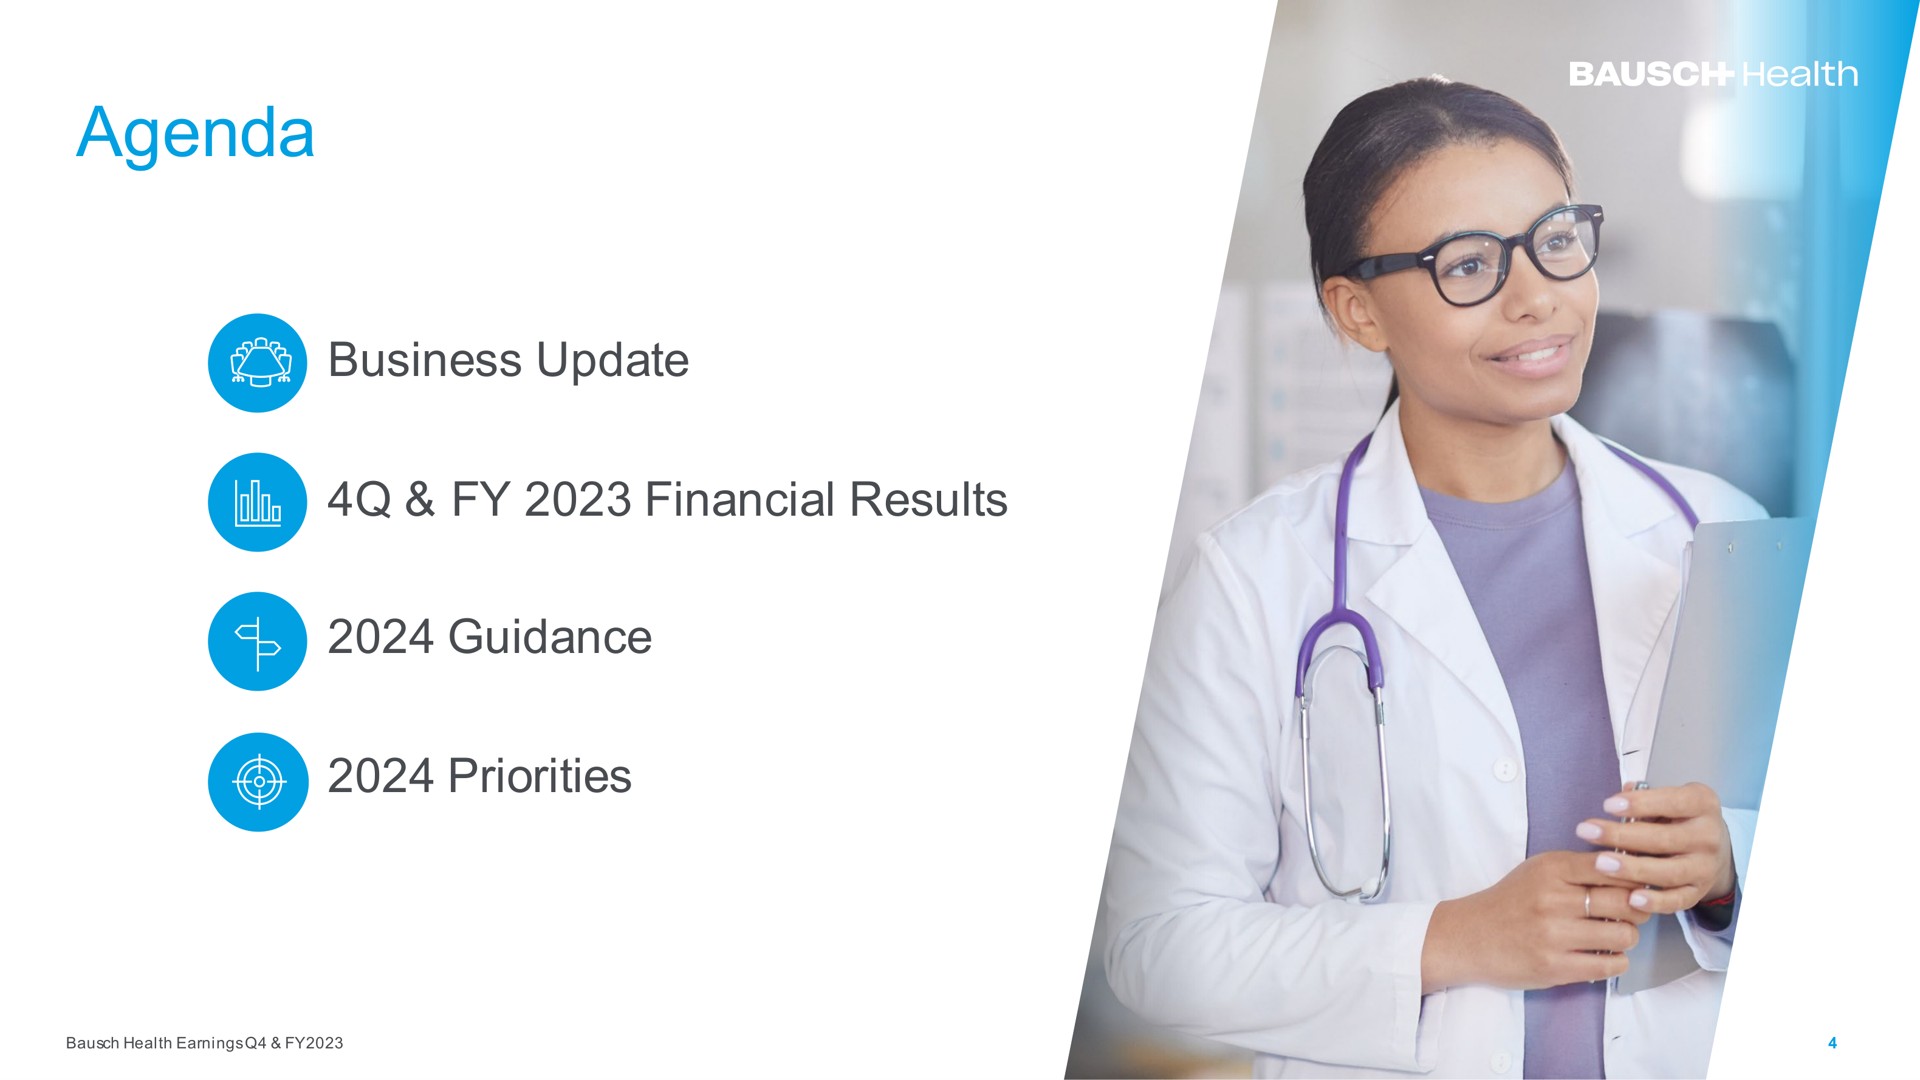 agenda business update financial results guidance priorities | Bausch Health Companies